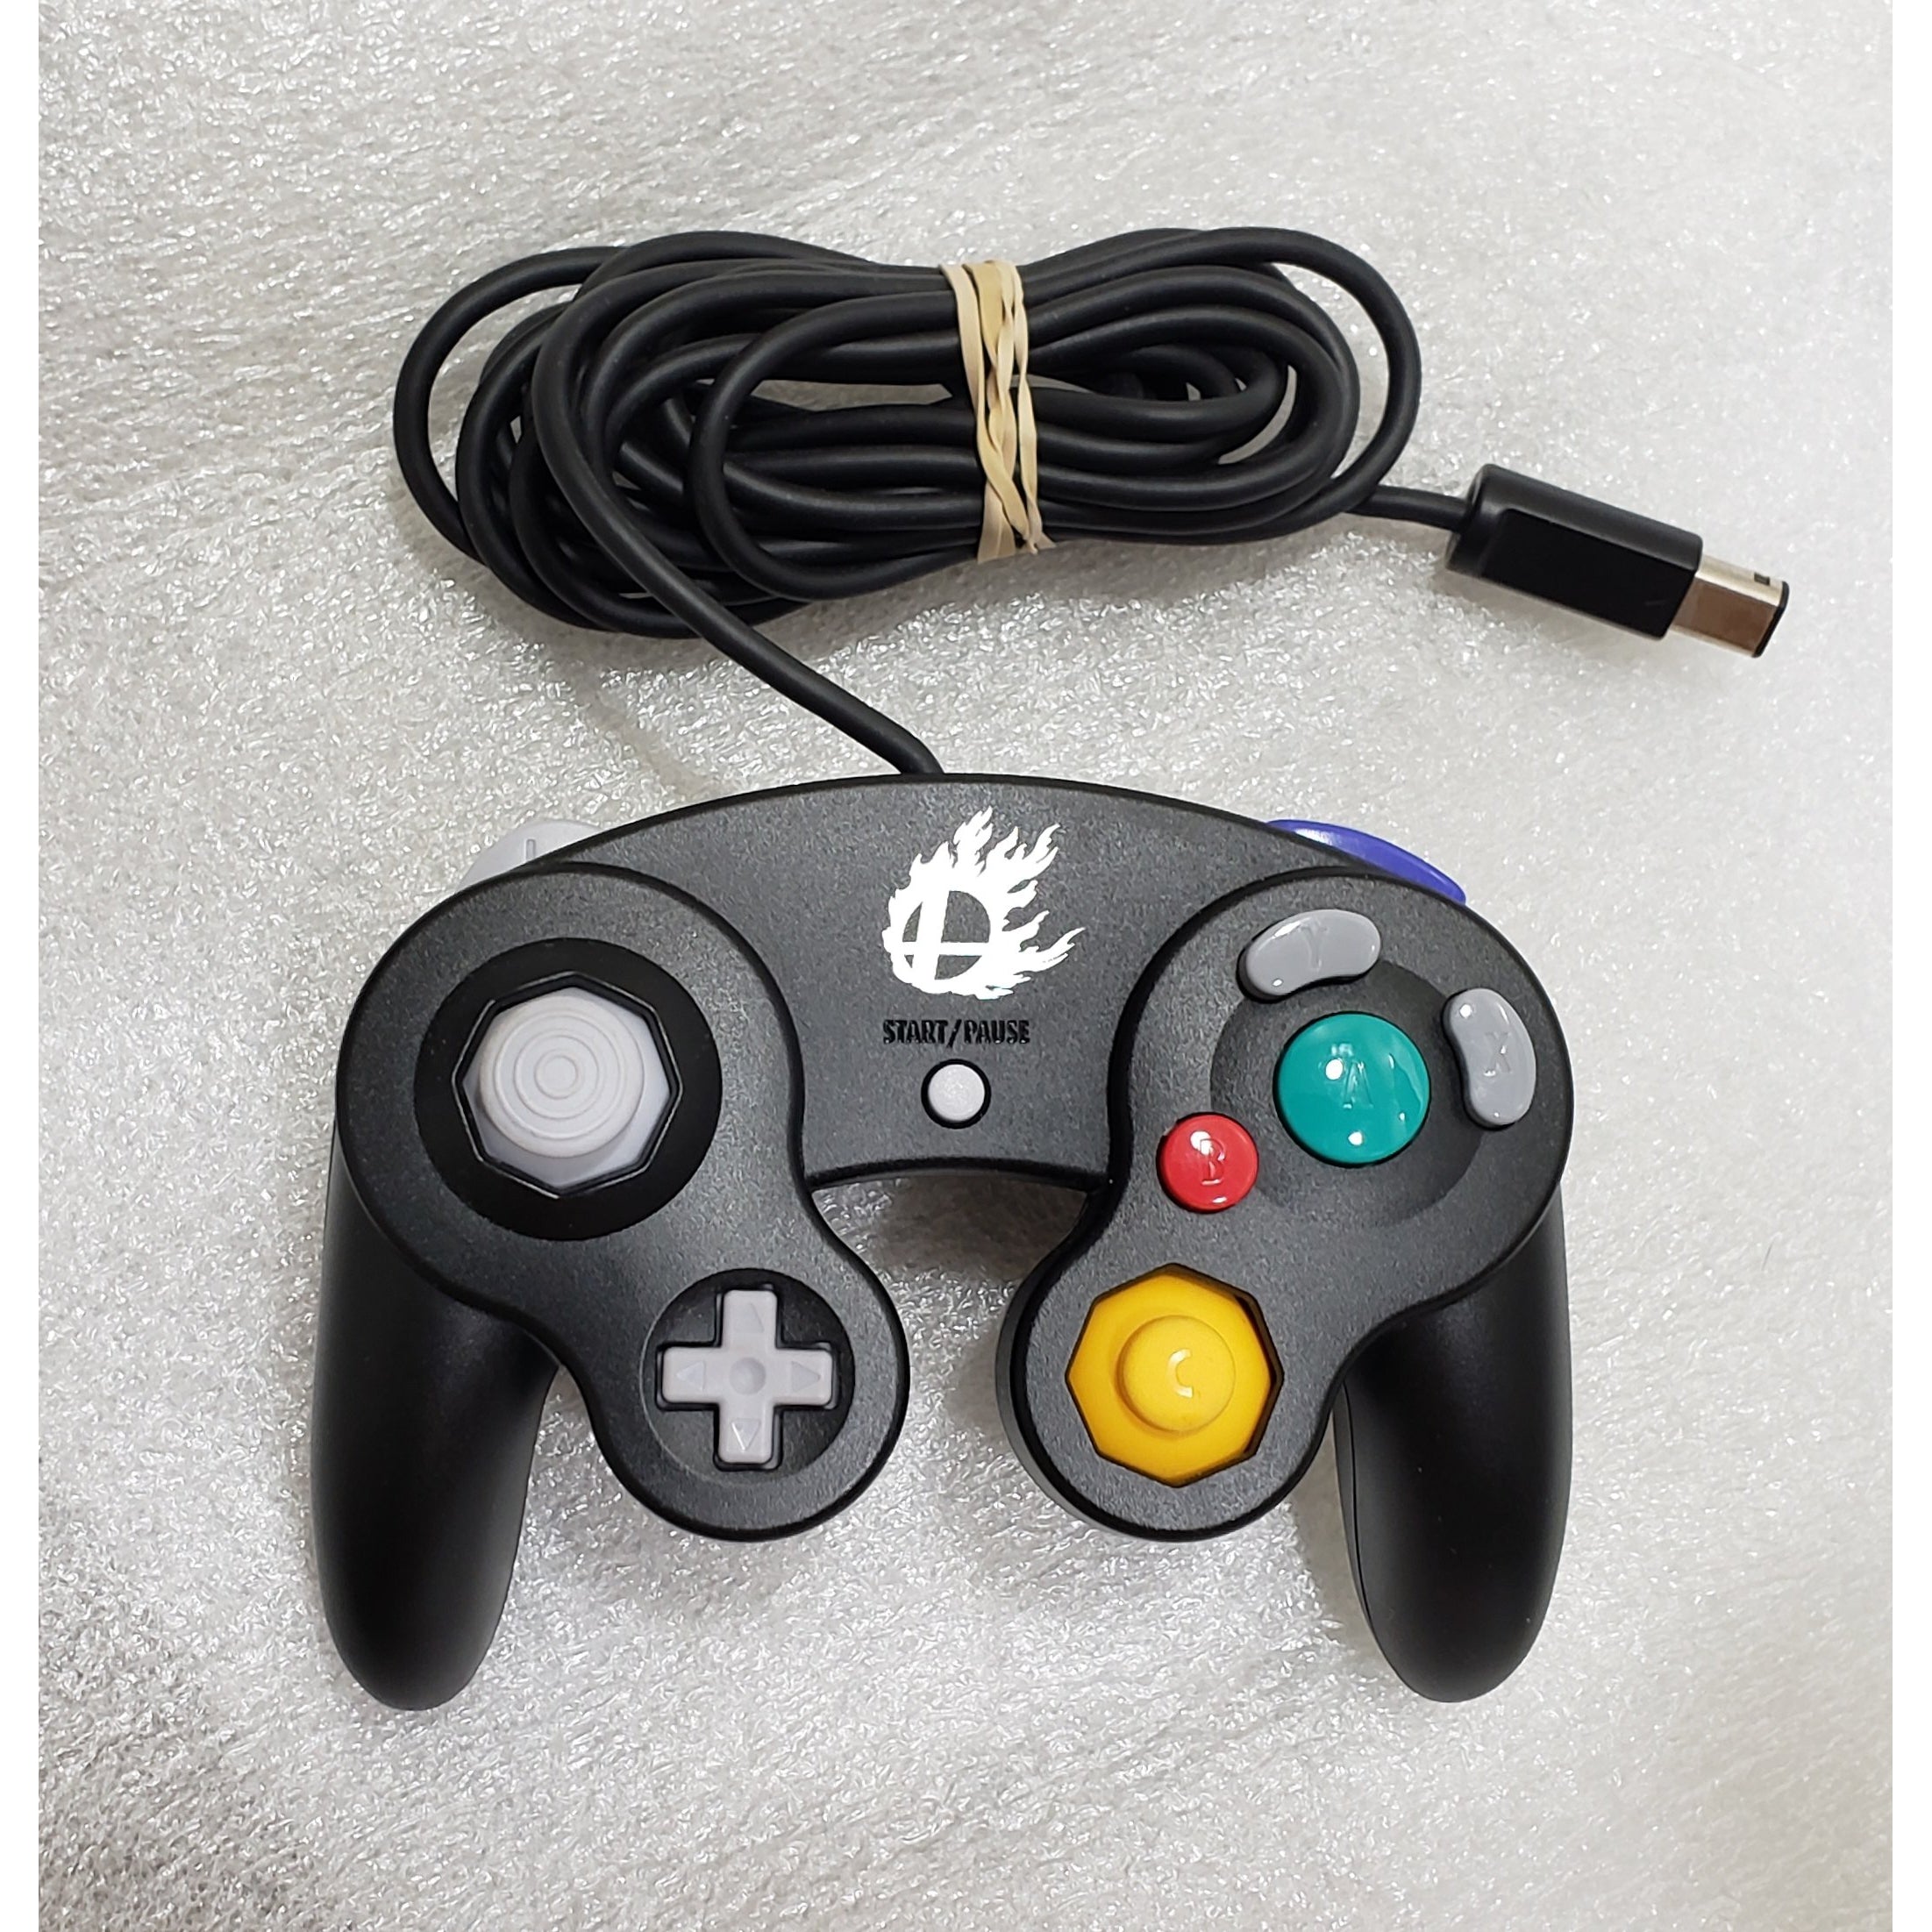 Nintendo GameCube Controller - Super Smash Bros. - YourGamingShop.com - Buy, Sell, Trade Video Games Online. 120 Day Warranty. Satisfaction Guaranteed.